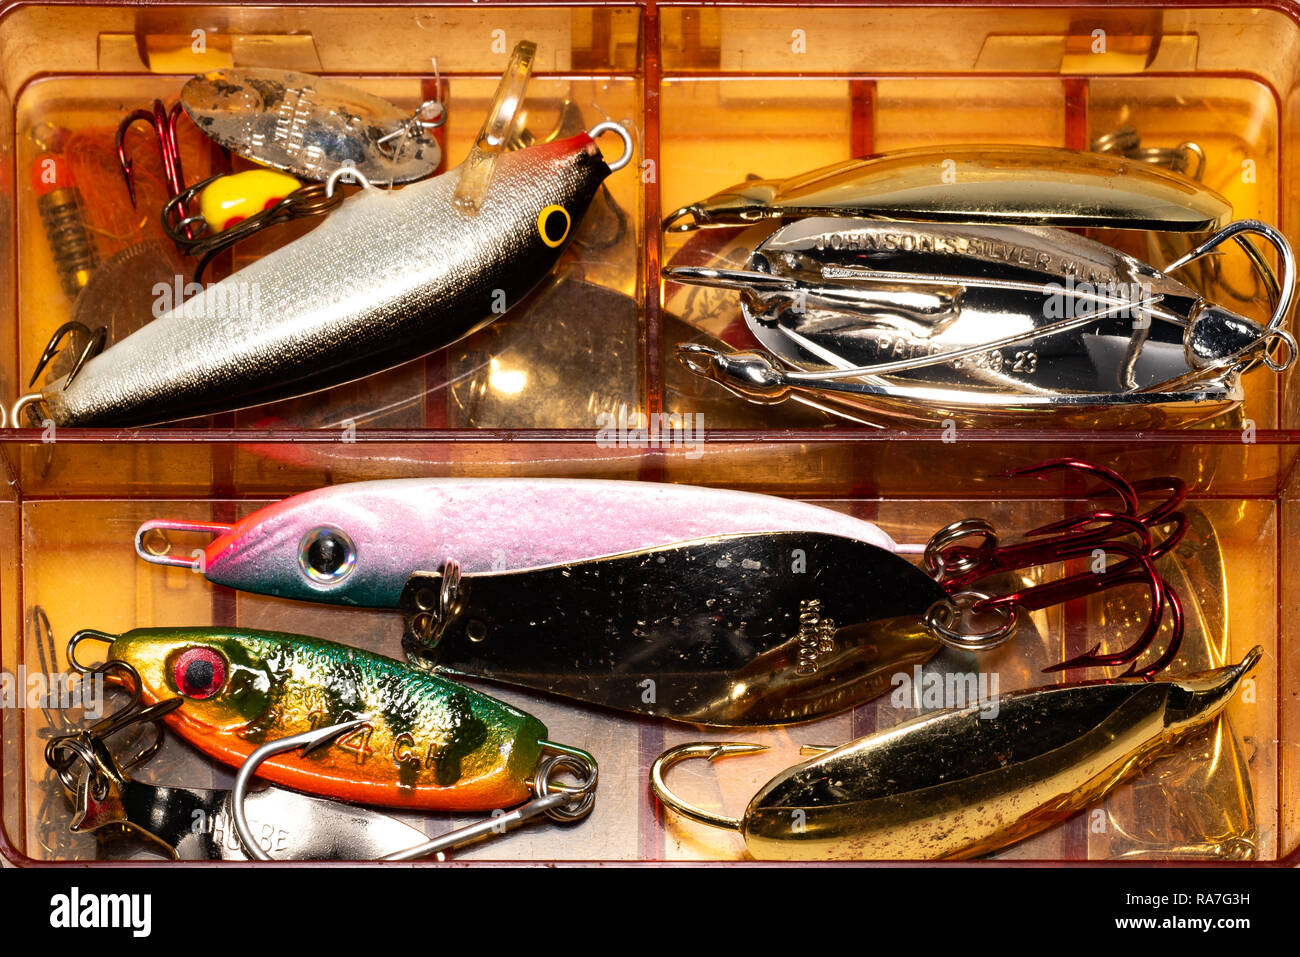 Señuelos pesca fotografías e imágenes de alta resolución - Alamy